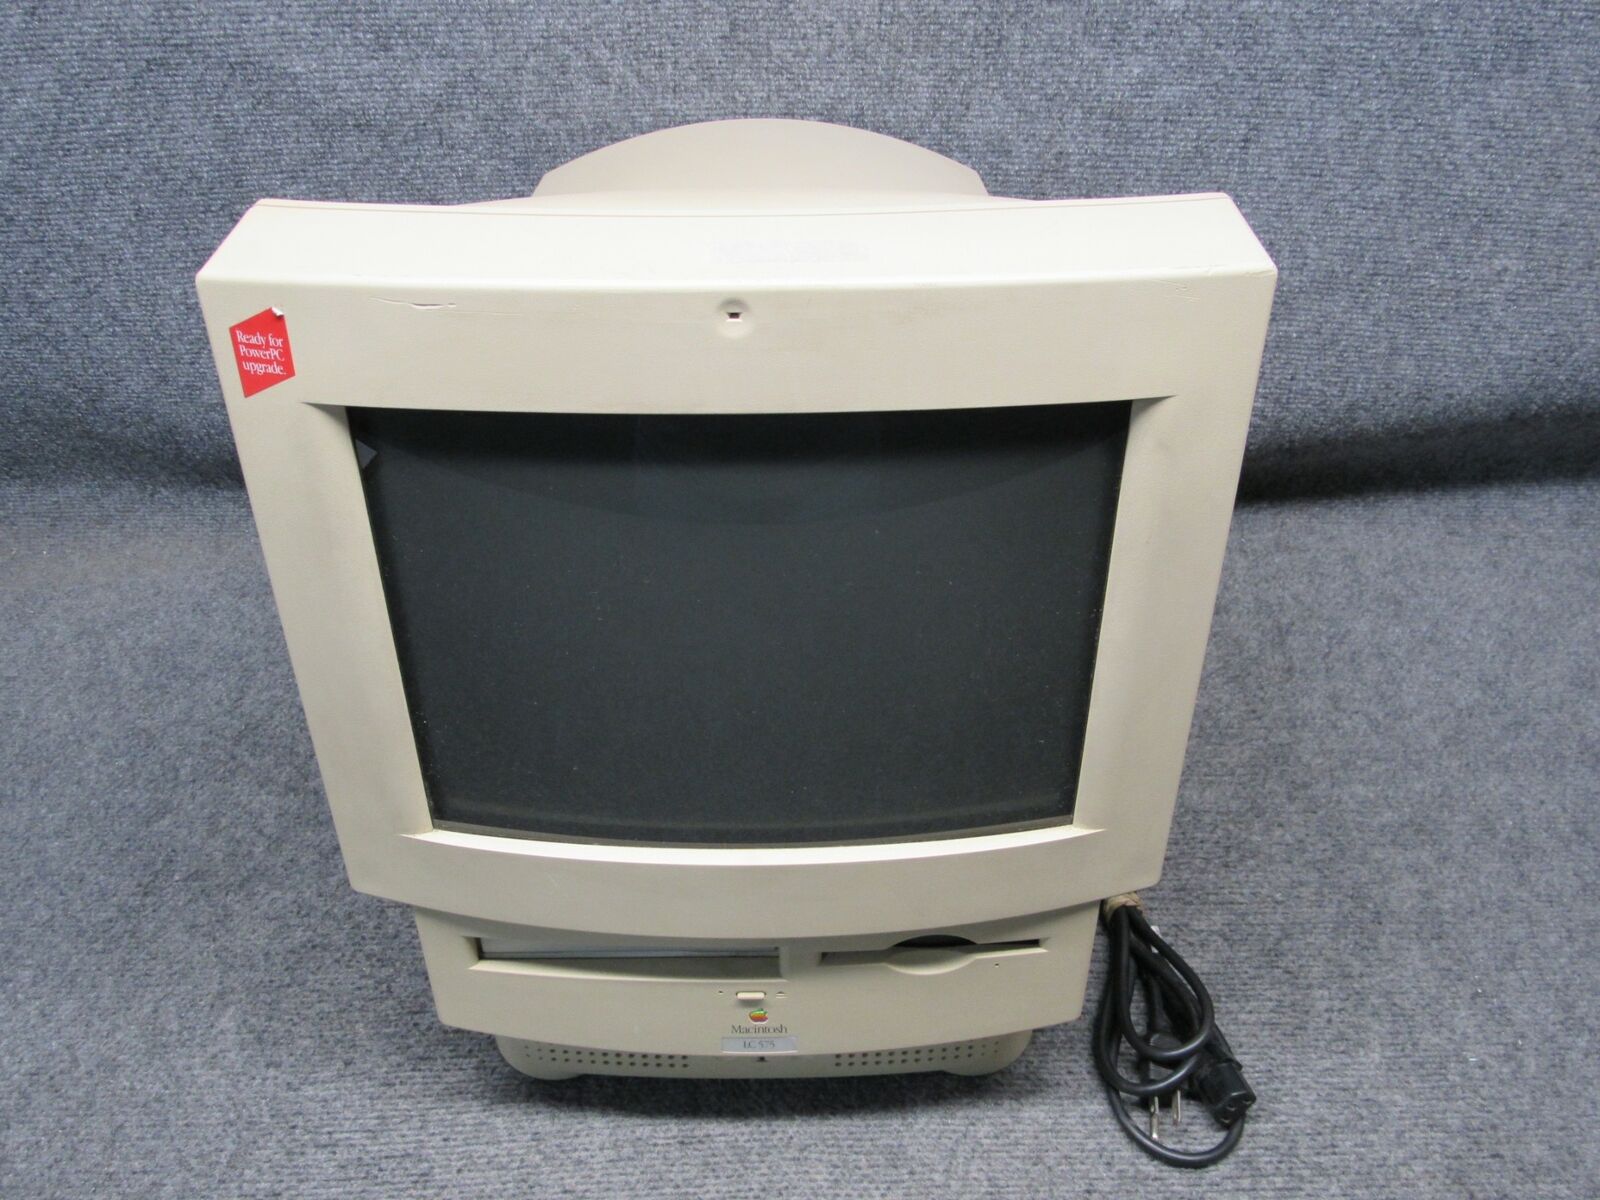 Vintage Apple Macintosh LC 575 M1640 14